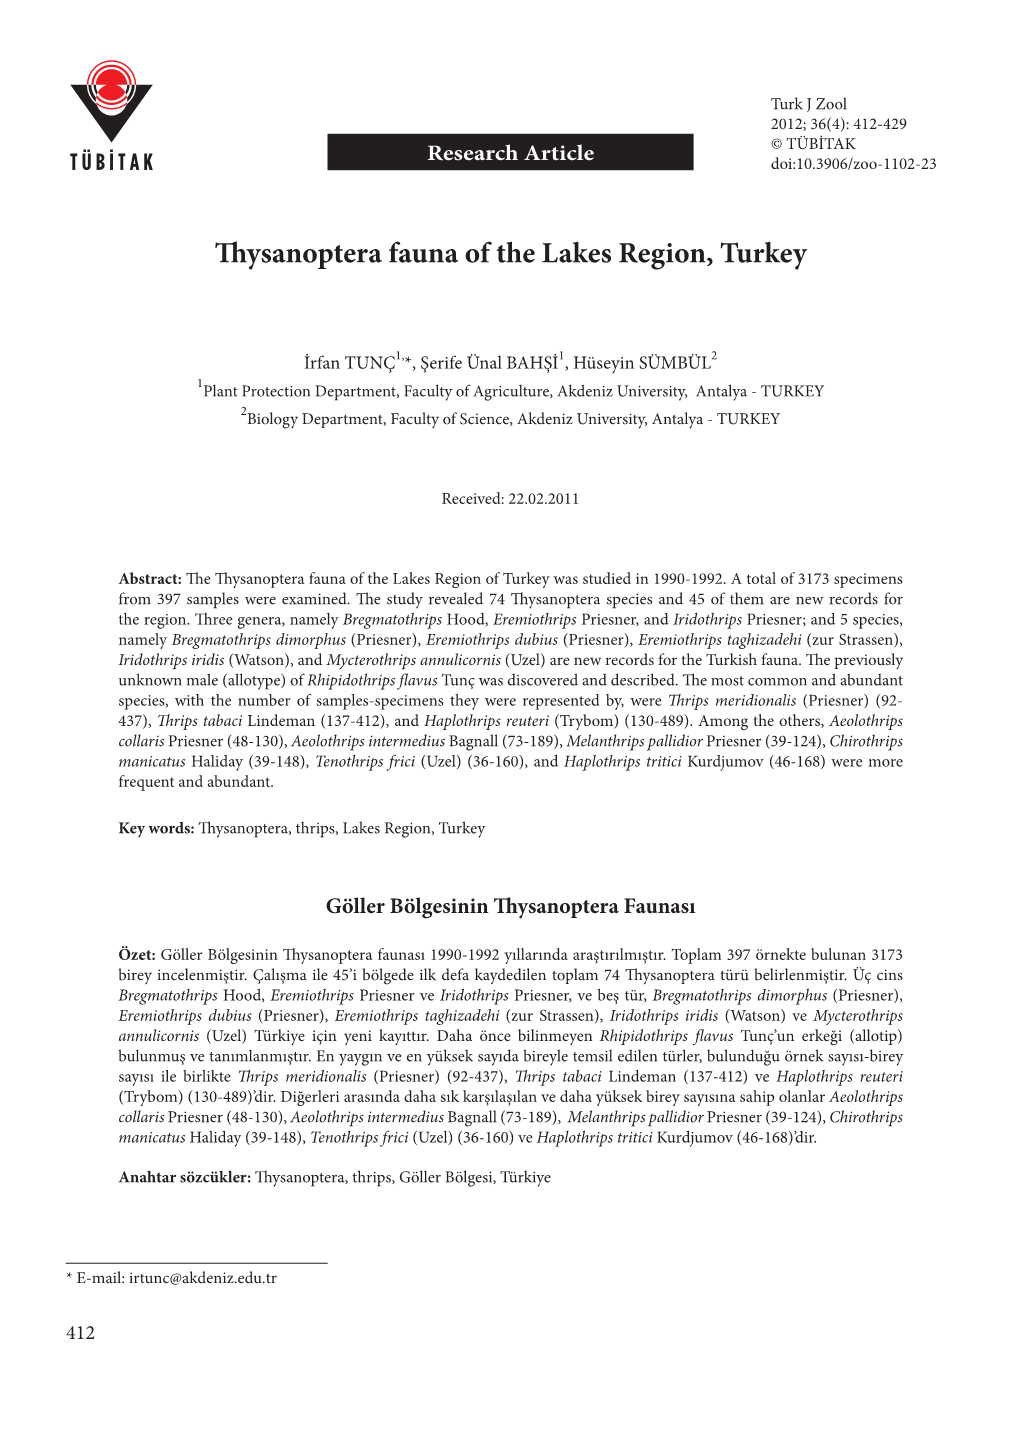 Thysanoptera Fauna of the Lakes Region, Turkey